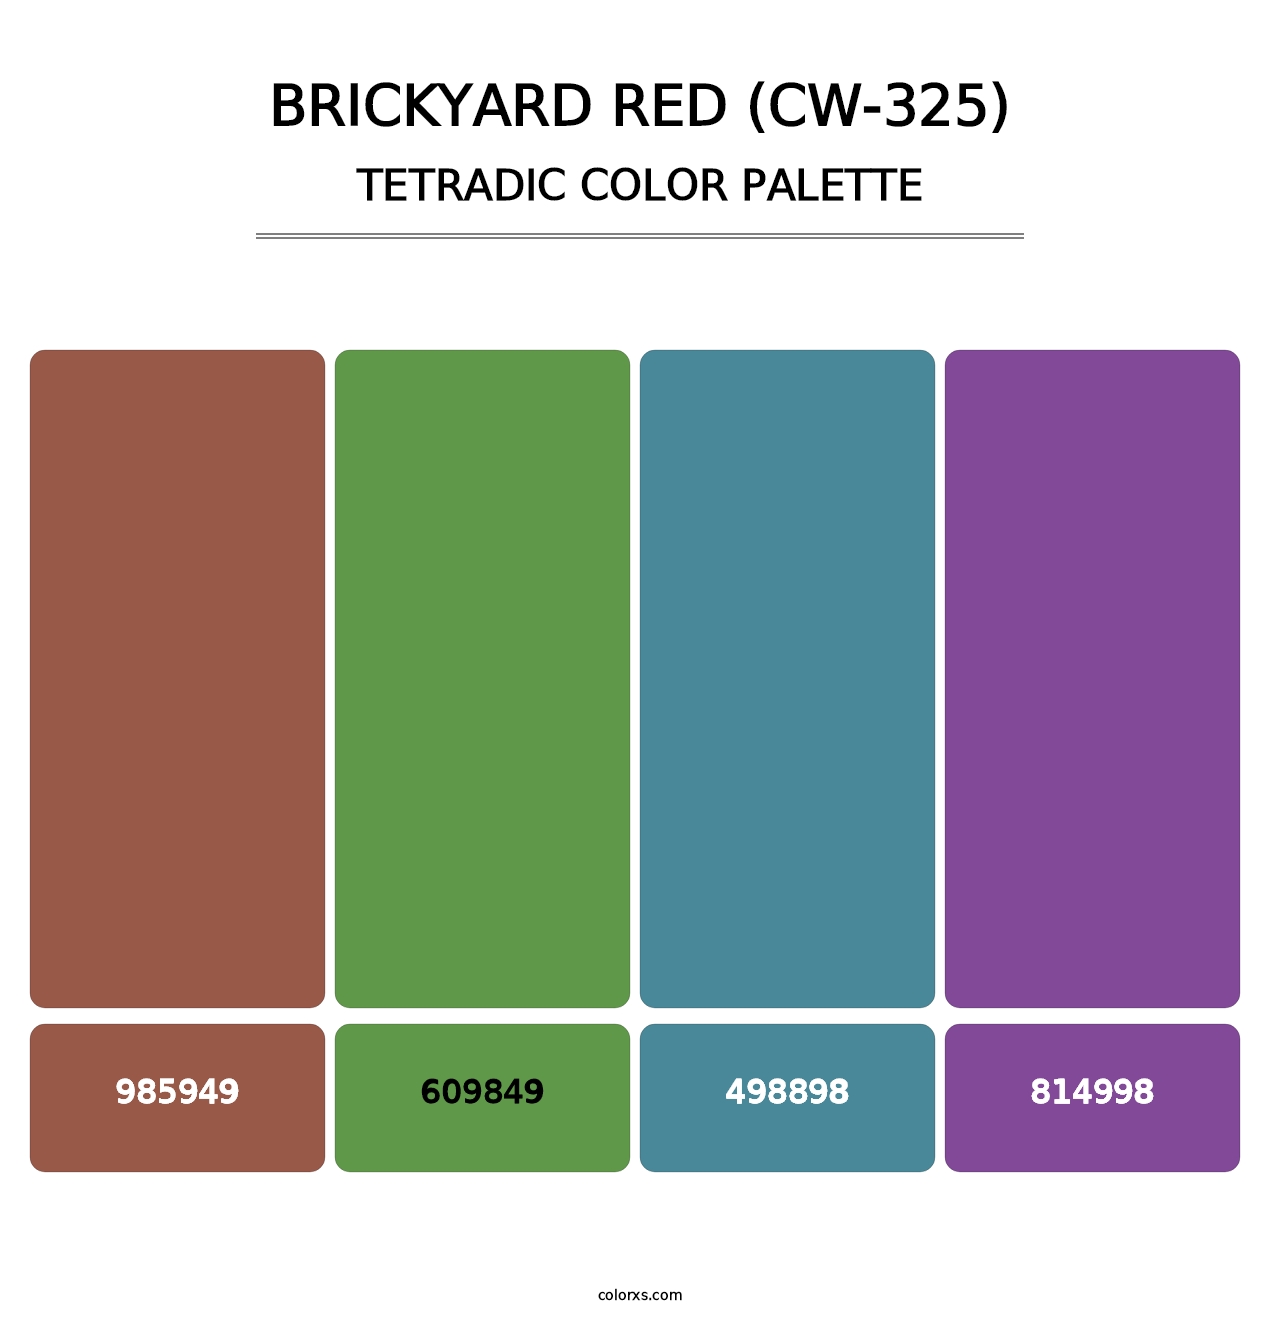 Brickyard Red (CW-325) - Tetradic Color Palette